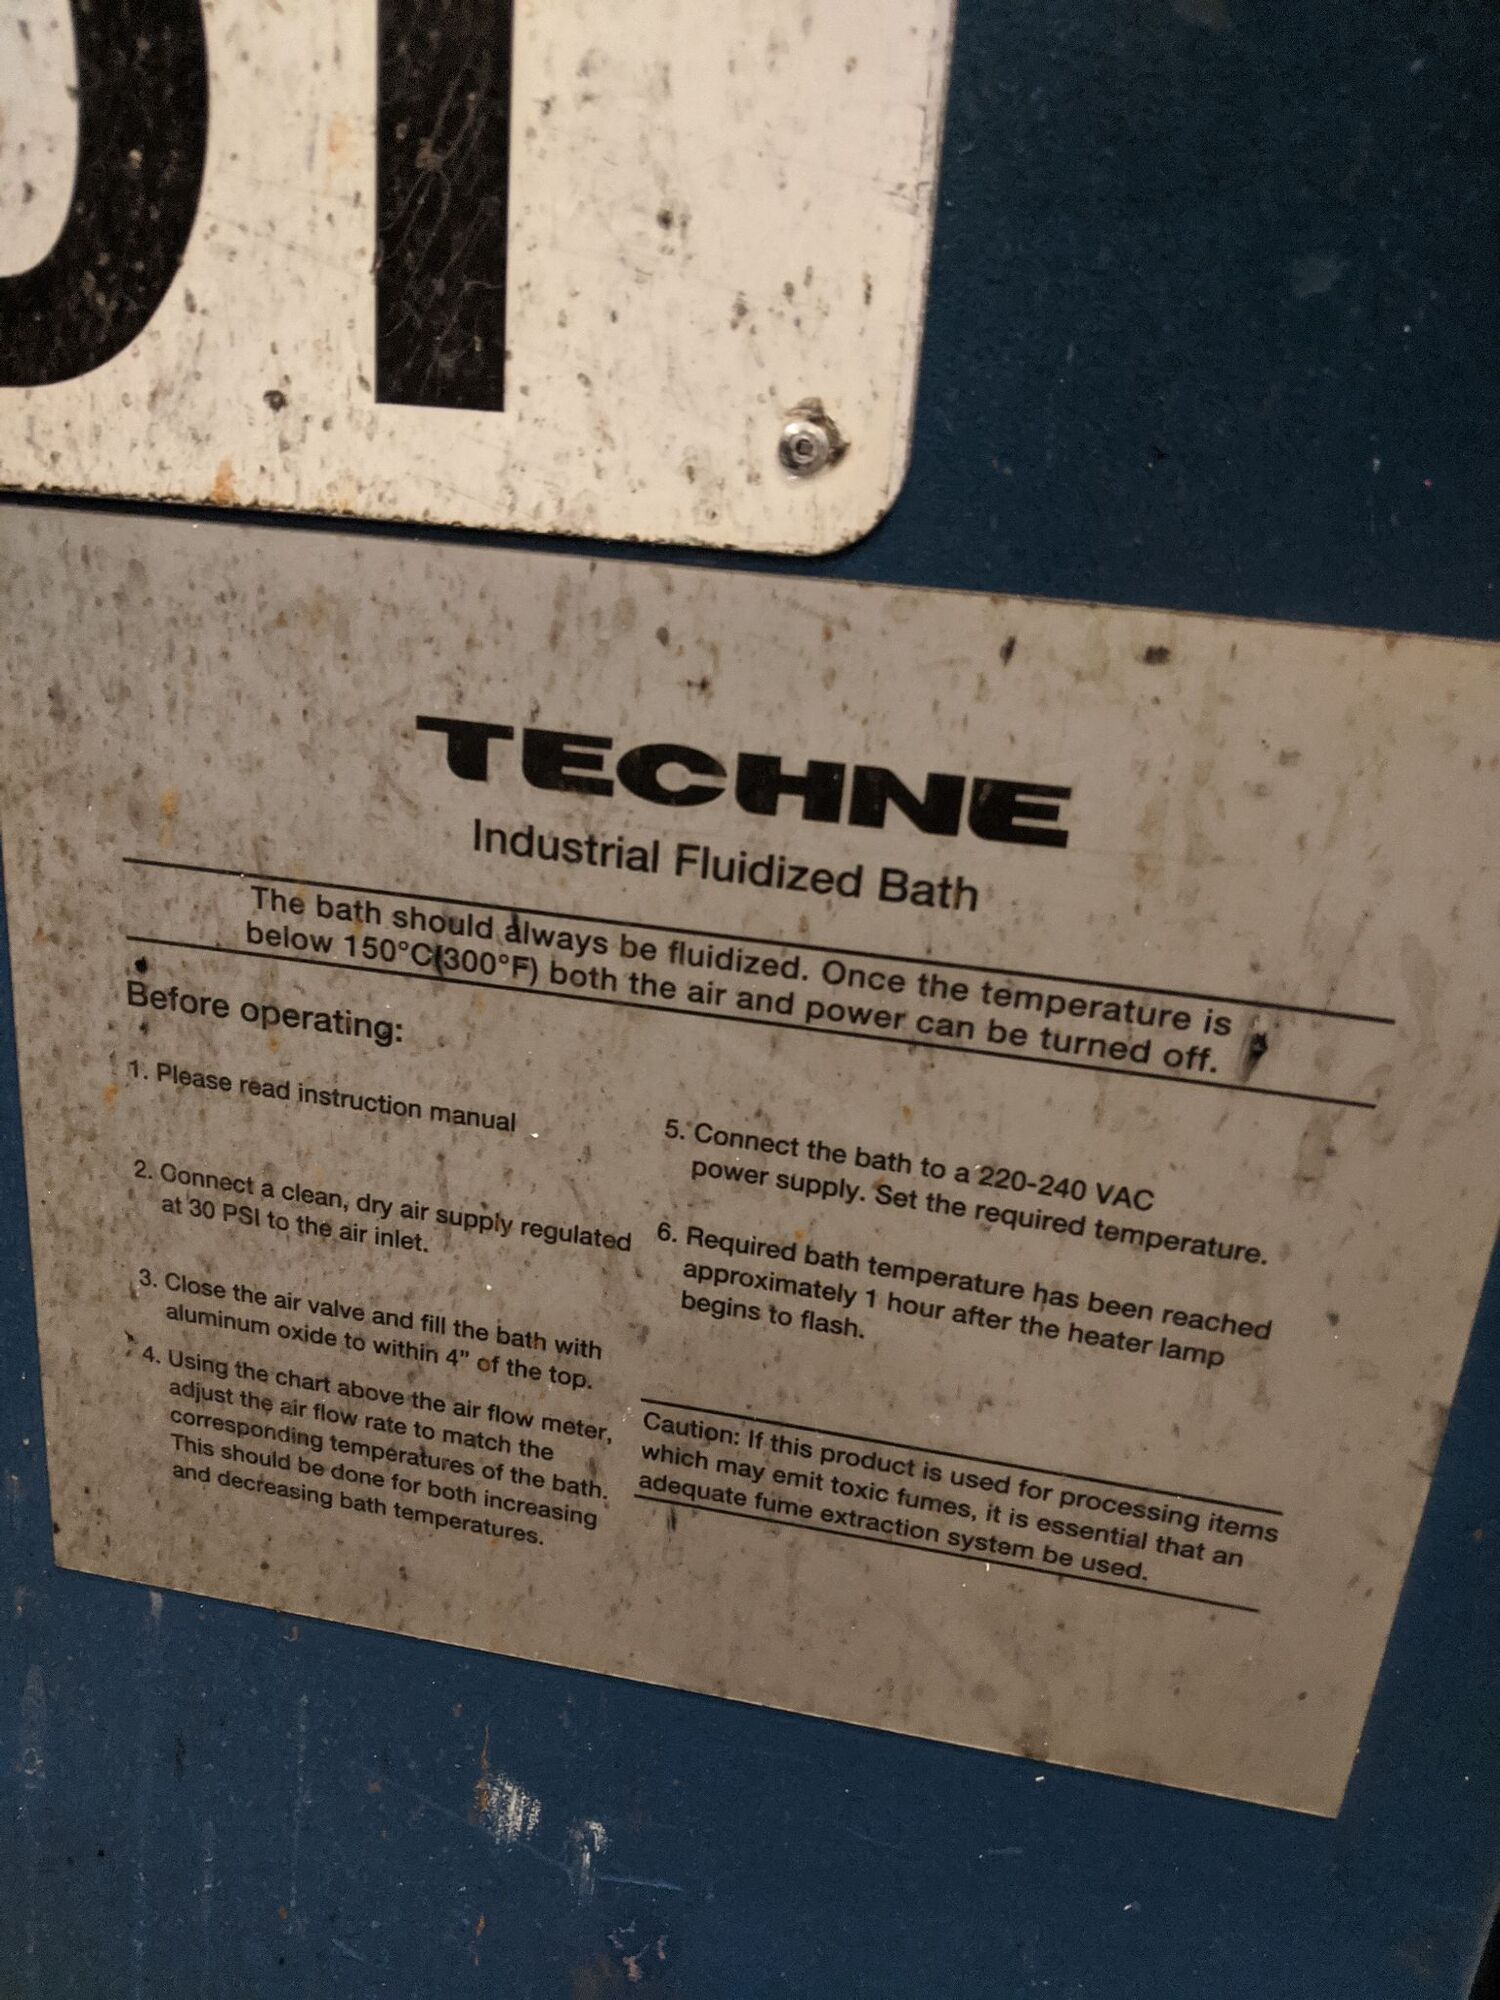 Techne IFB-52 Industrial Fluidized Bath  Parts Cleaner | The Pelletizer Group